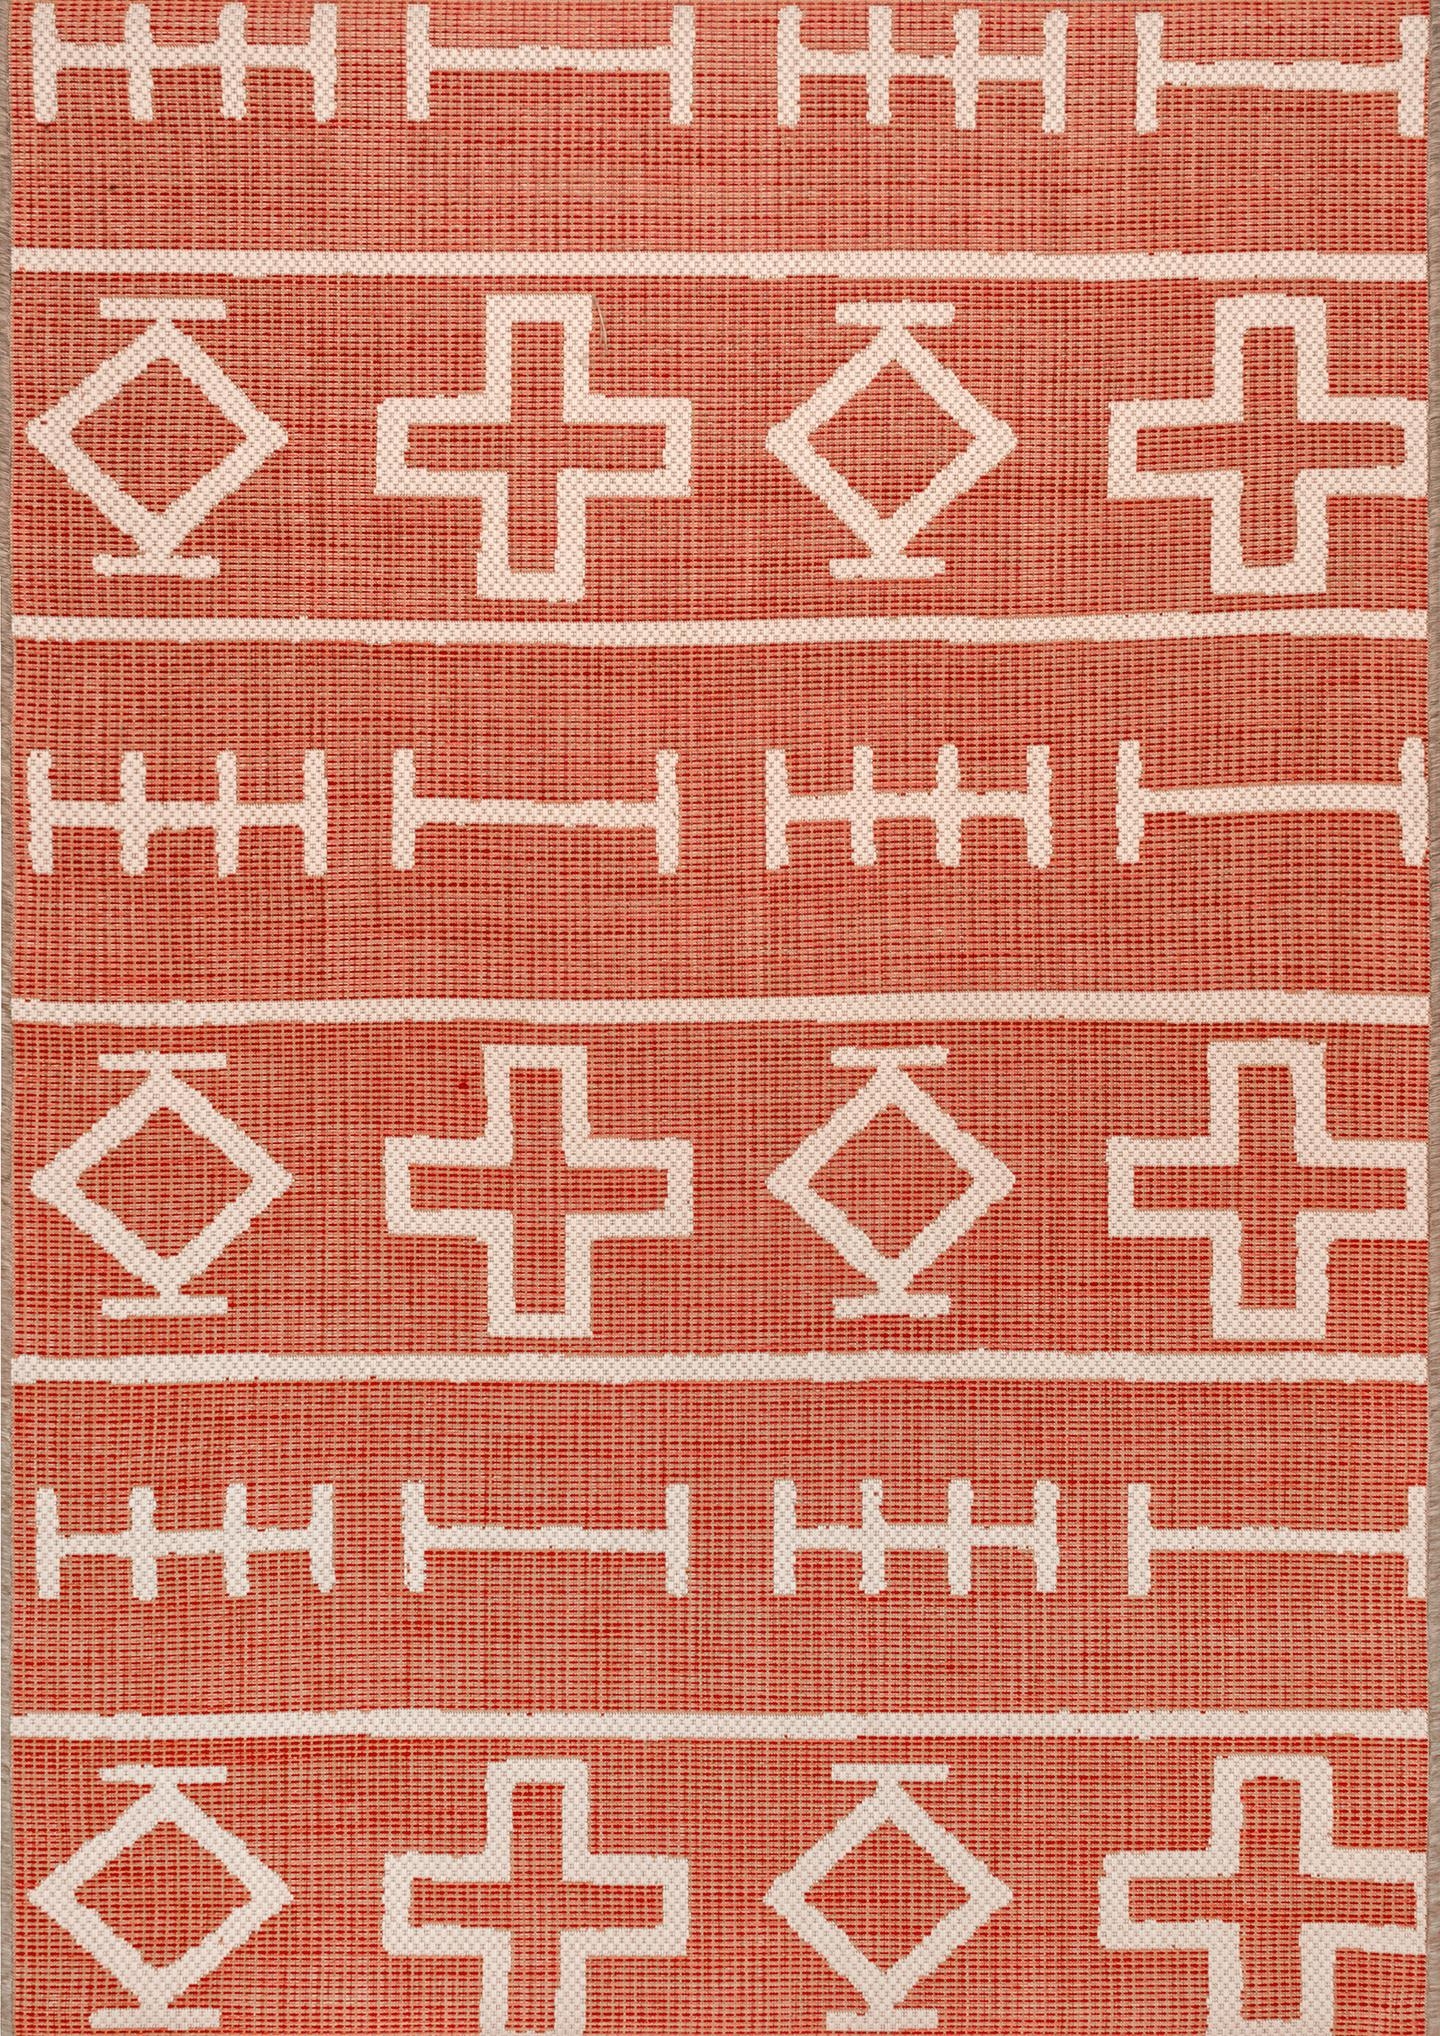 Holland Ethnic Symbols Indoor/Outdoor Area Rug - Image 1